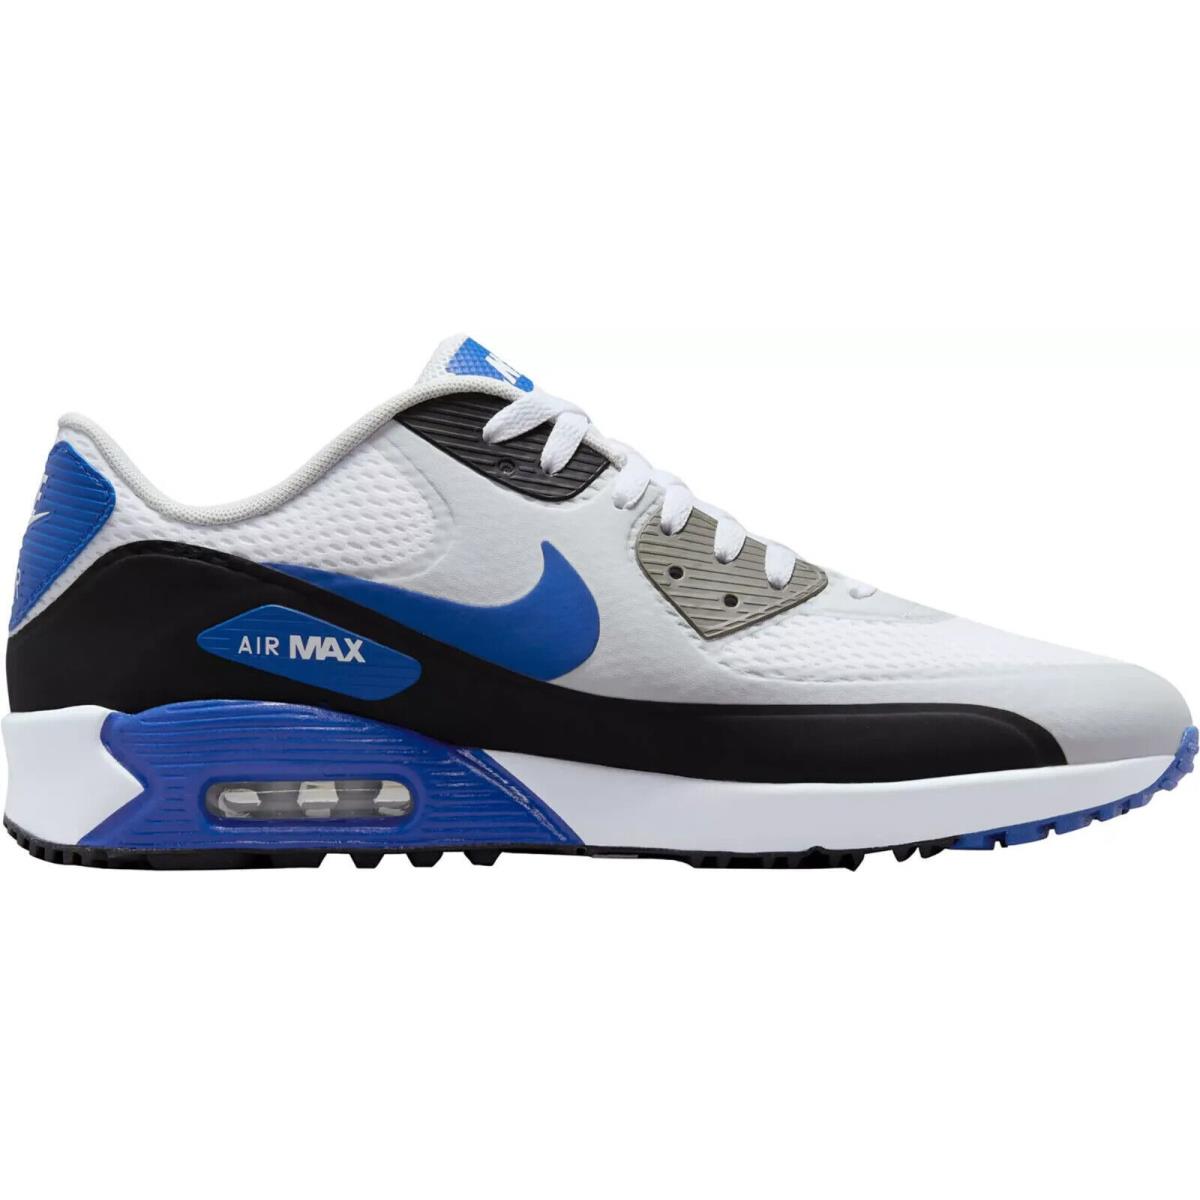 Golf Nike Air Max 90 G Men`s Shoes All Colors US Szs 7-13 White/Black/Photon Dust/Game Royal